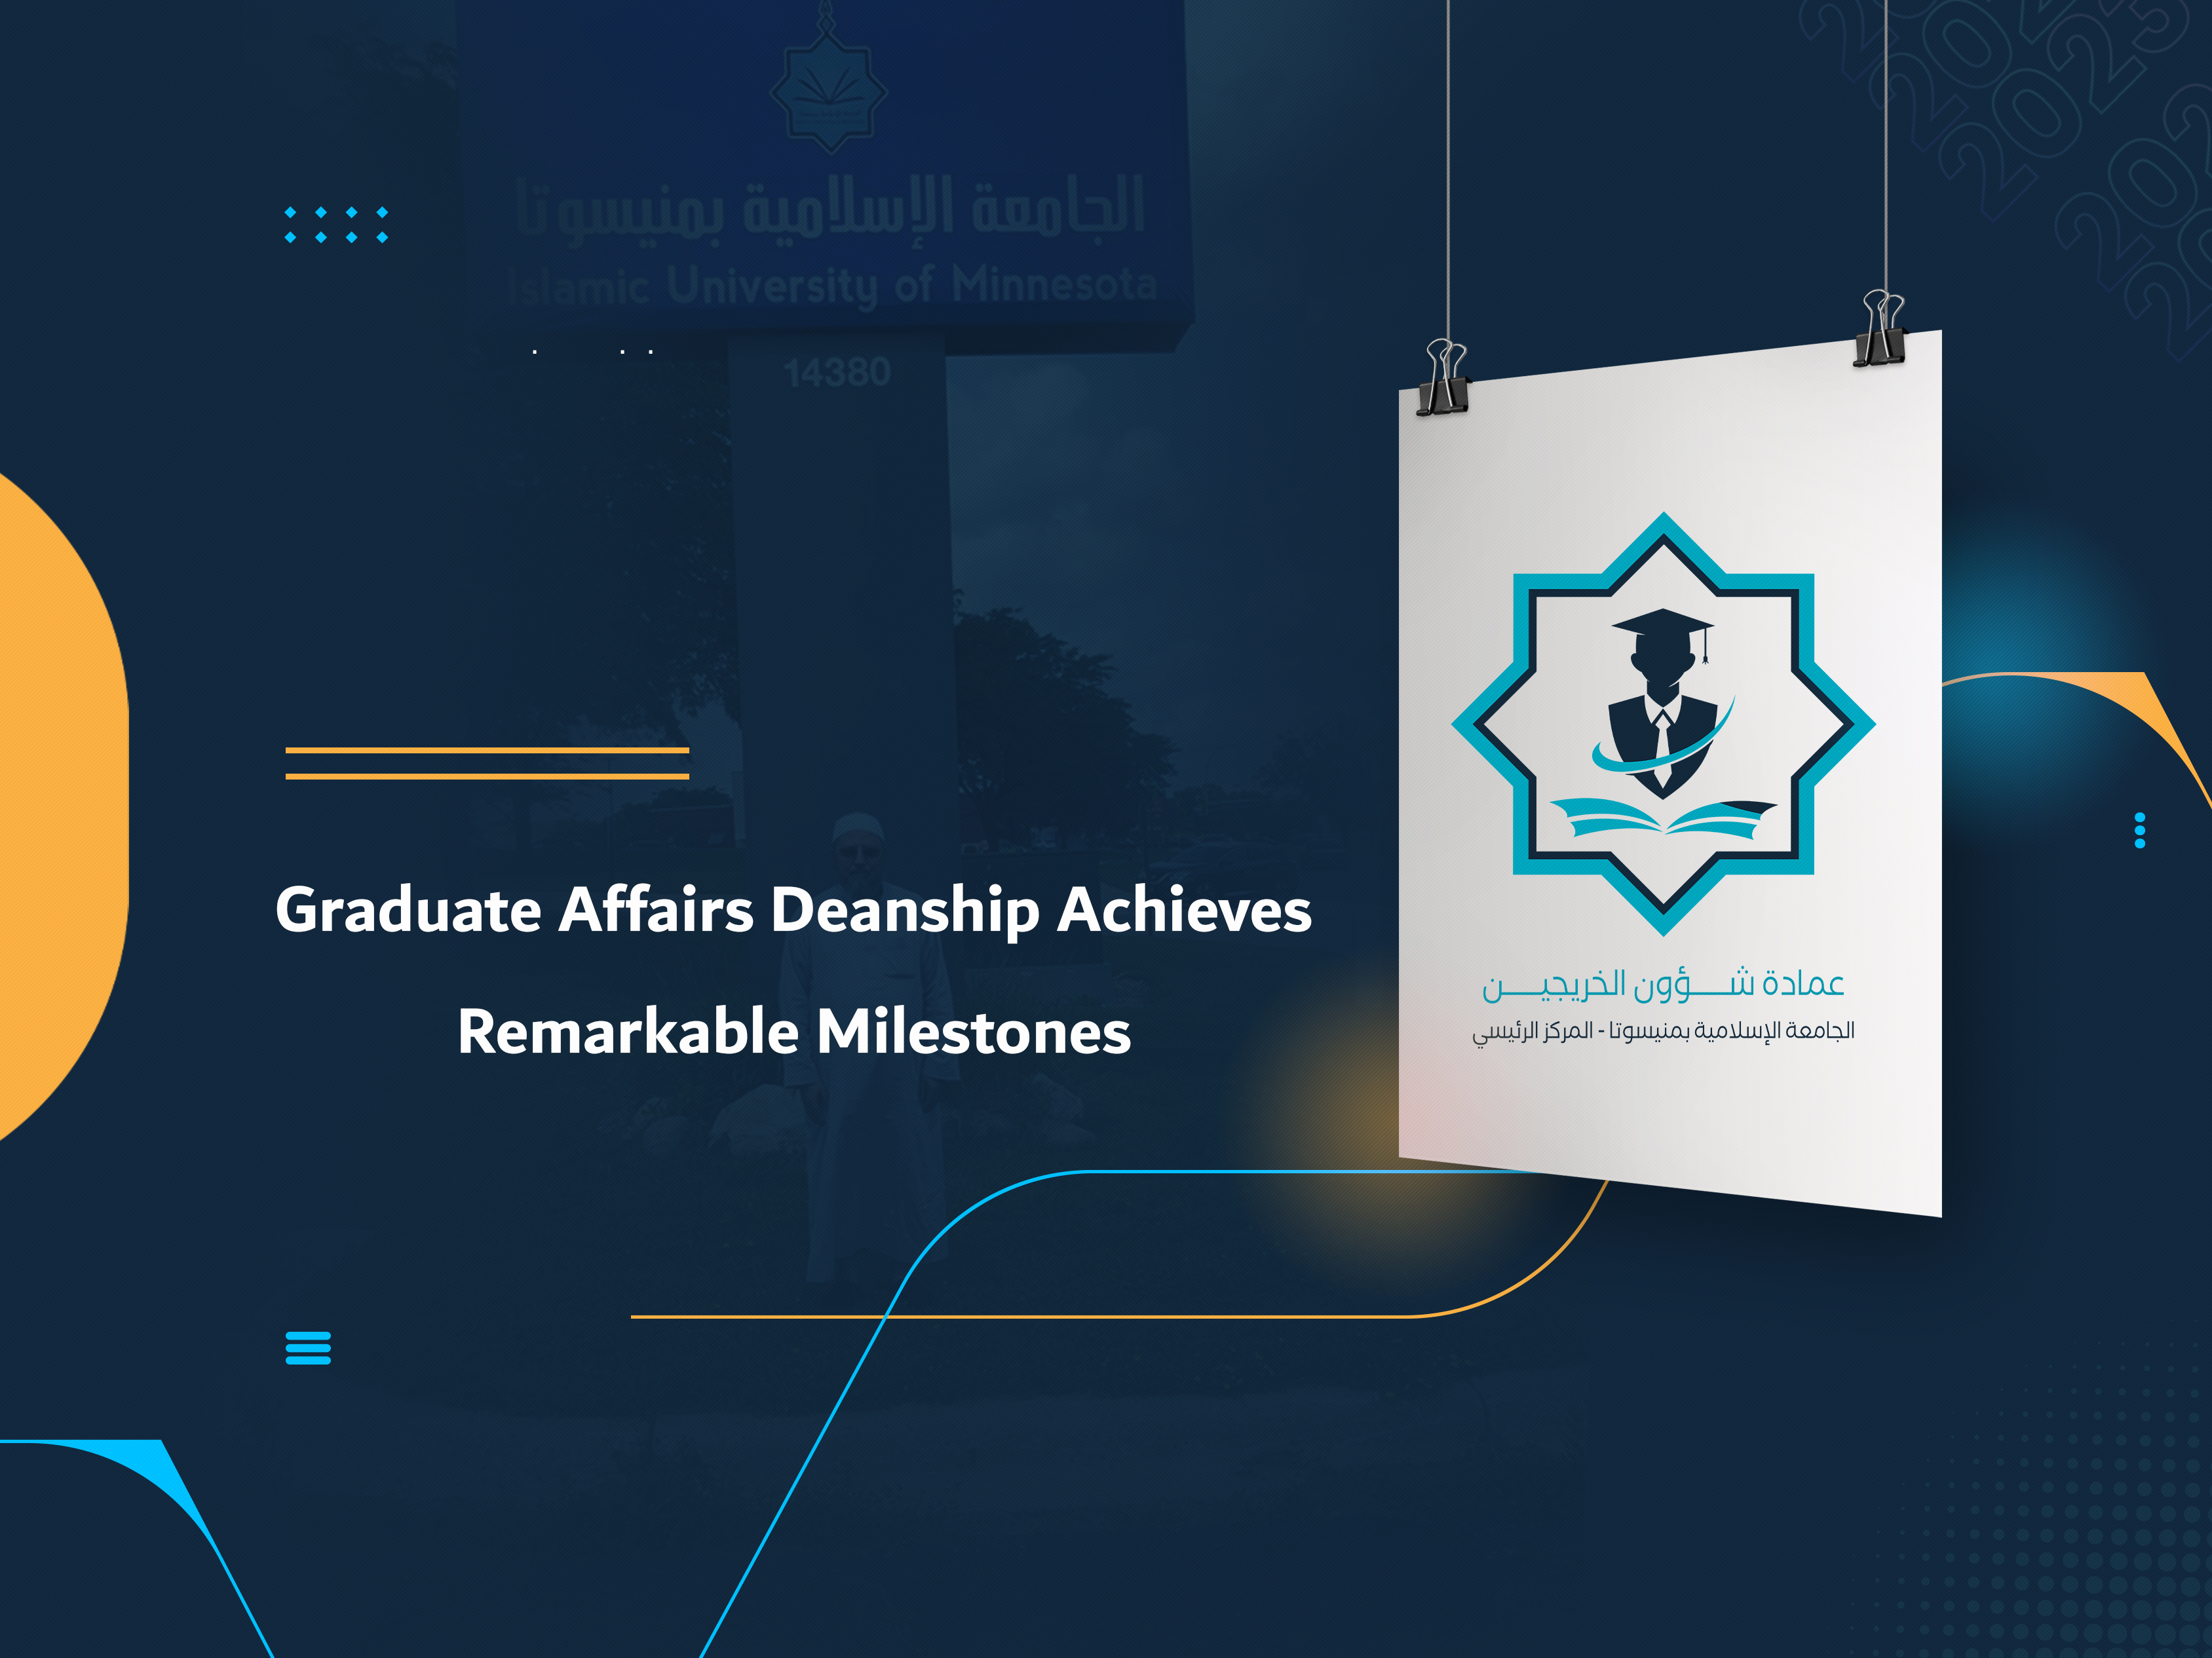 Graduate Affairs Deanship Achieves Remarkable Milestones